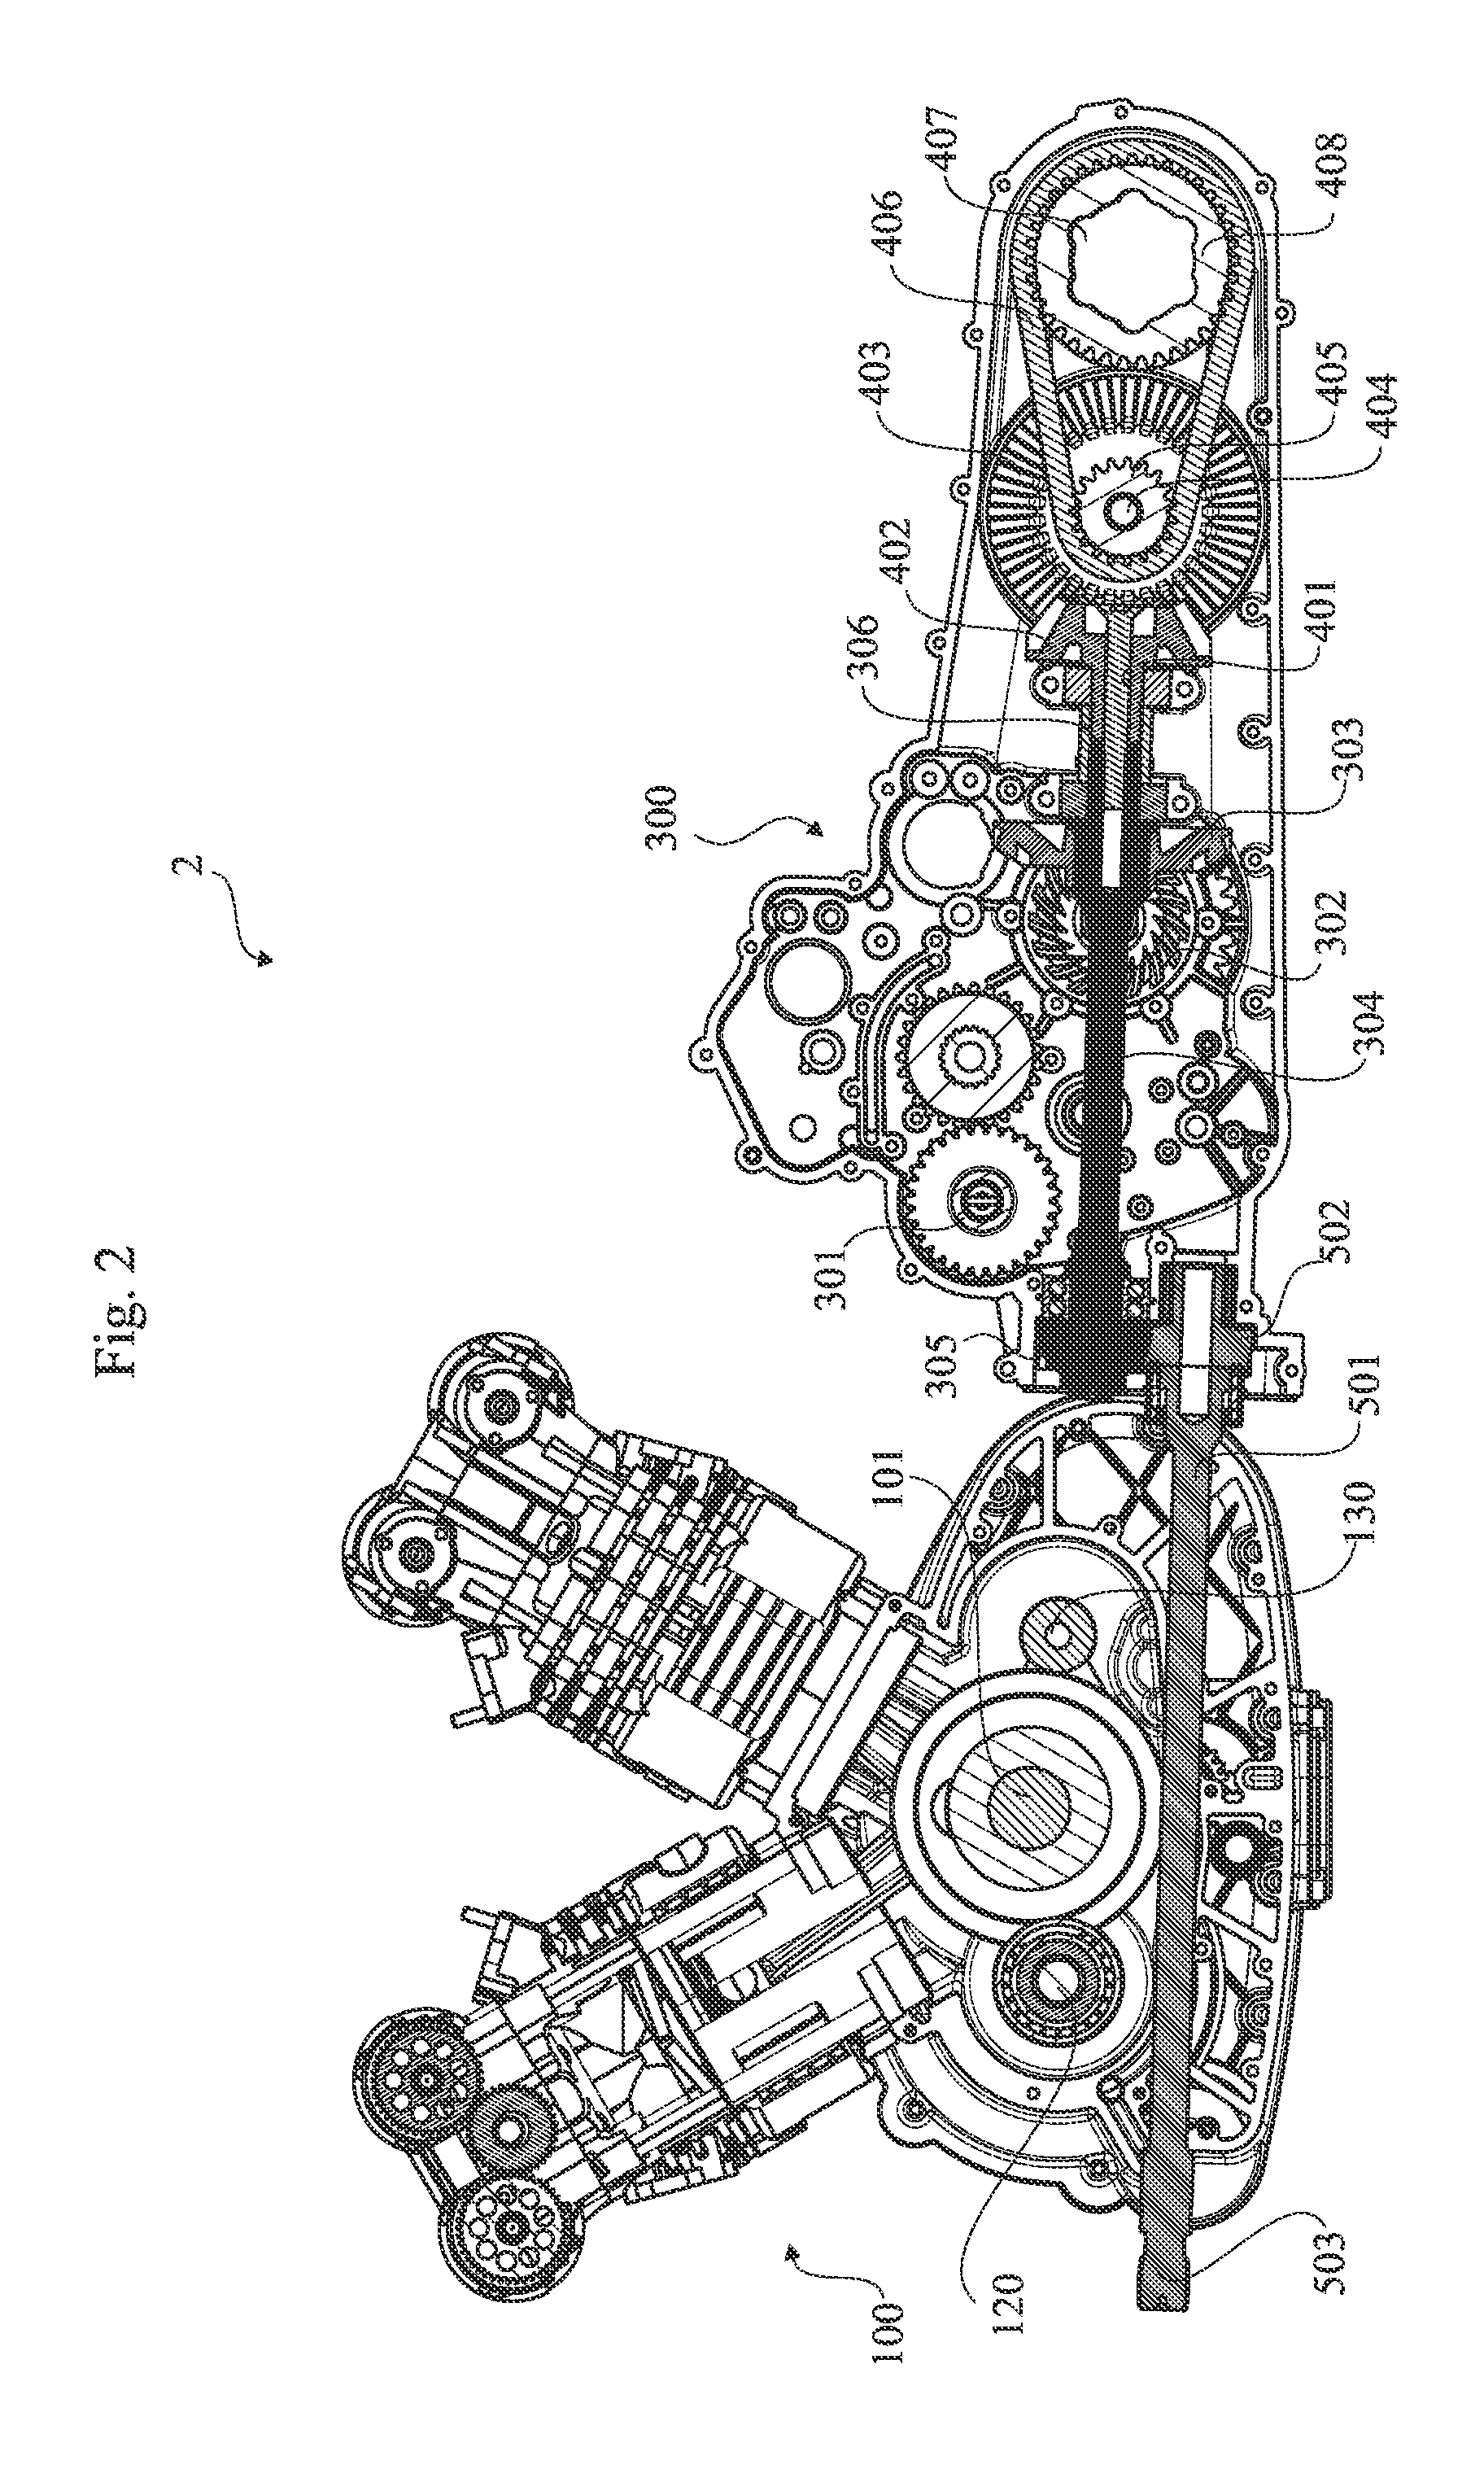 Gear shift arrangement for a vehicle